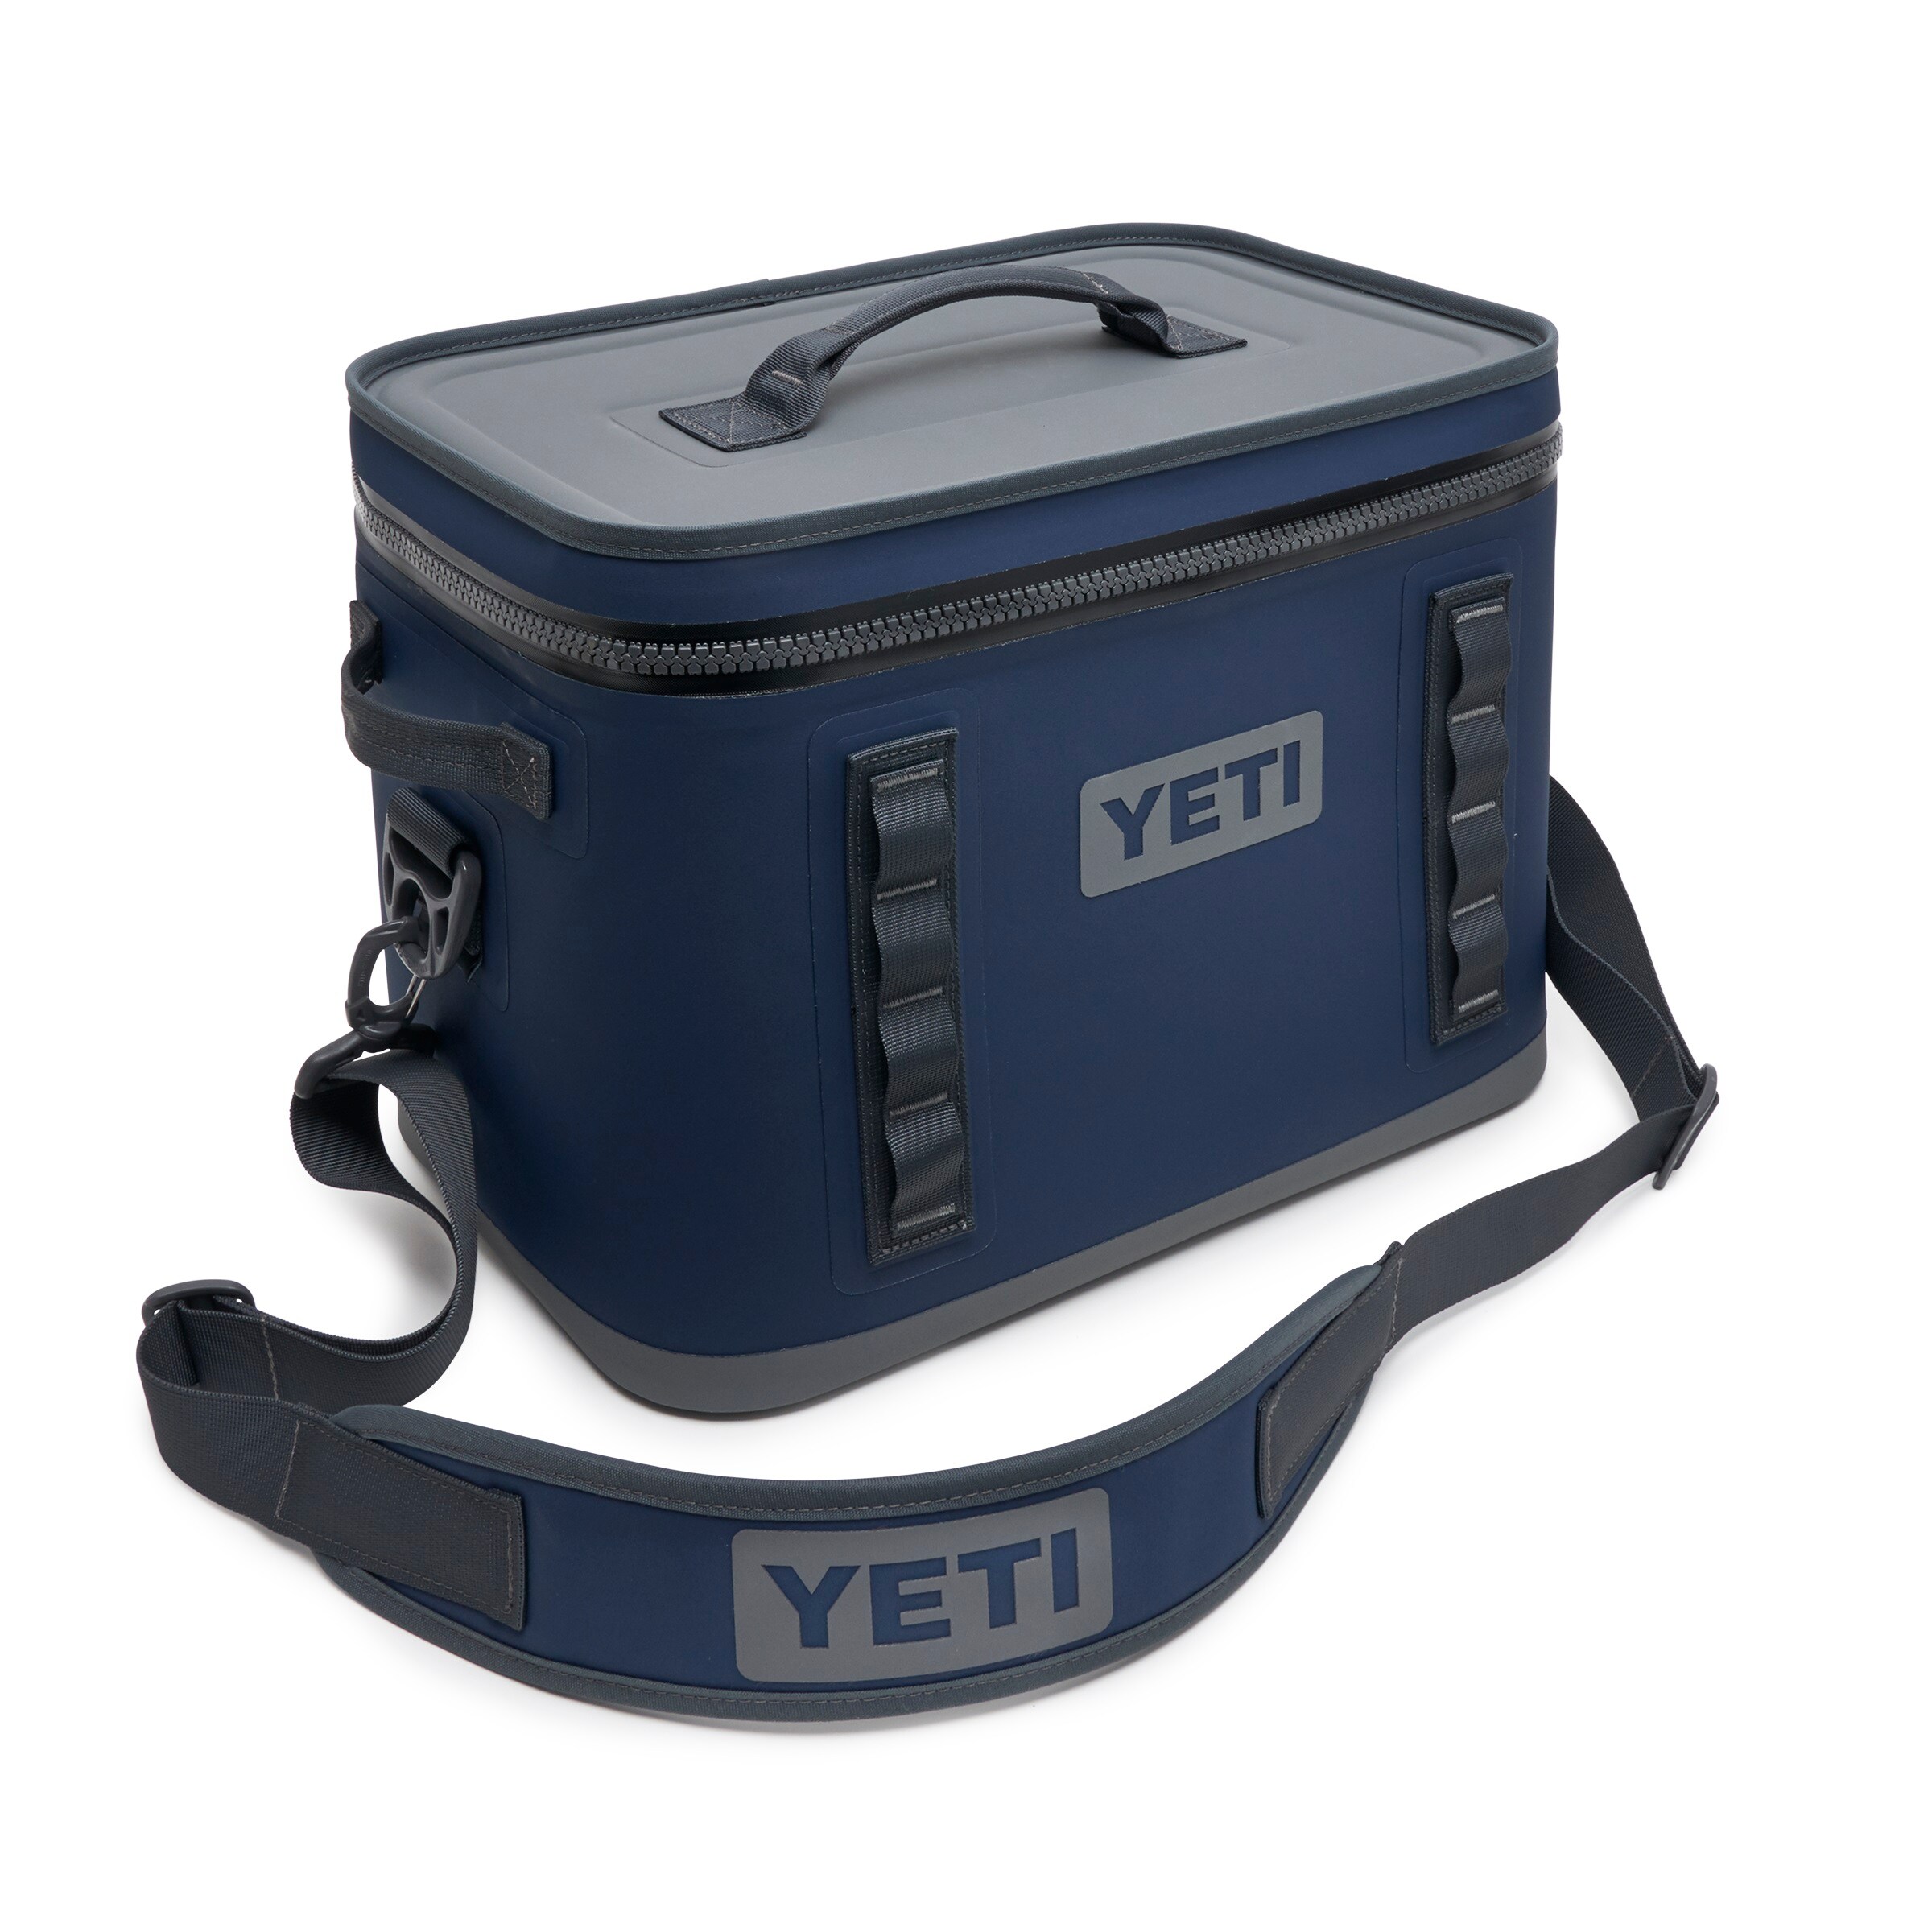 YETI Hopper Flip 18 Insulated Personal Cooler, Aquifer Blue in the